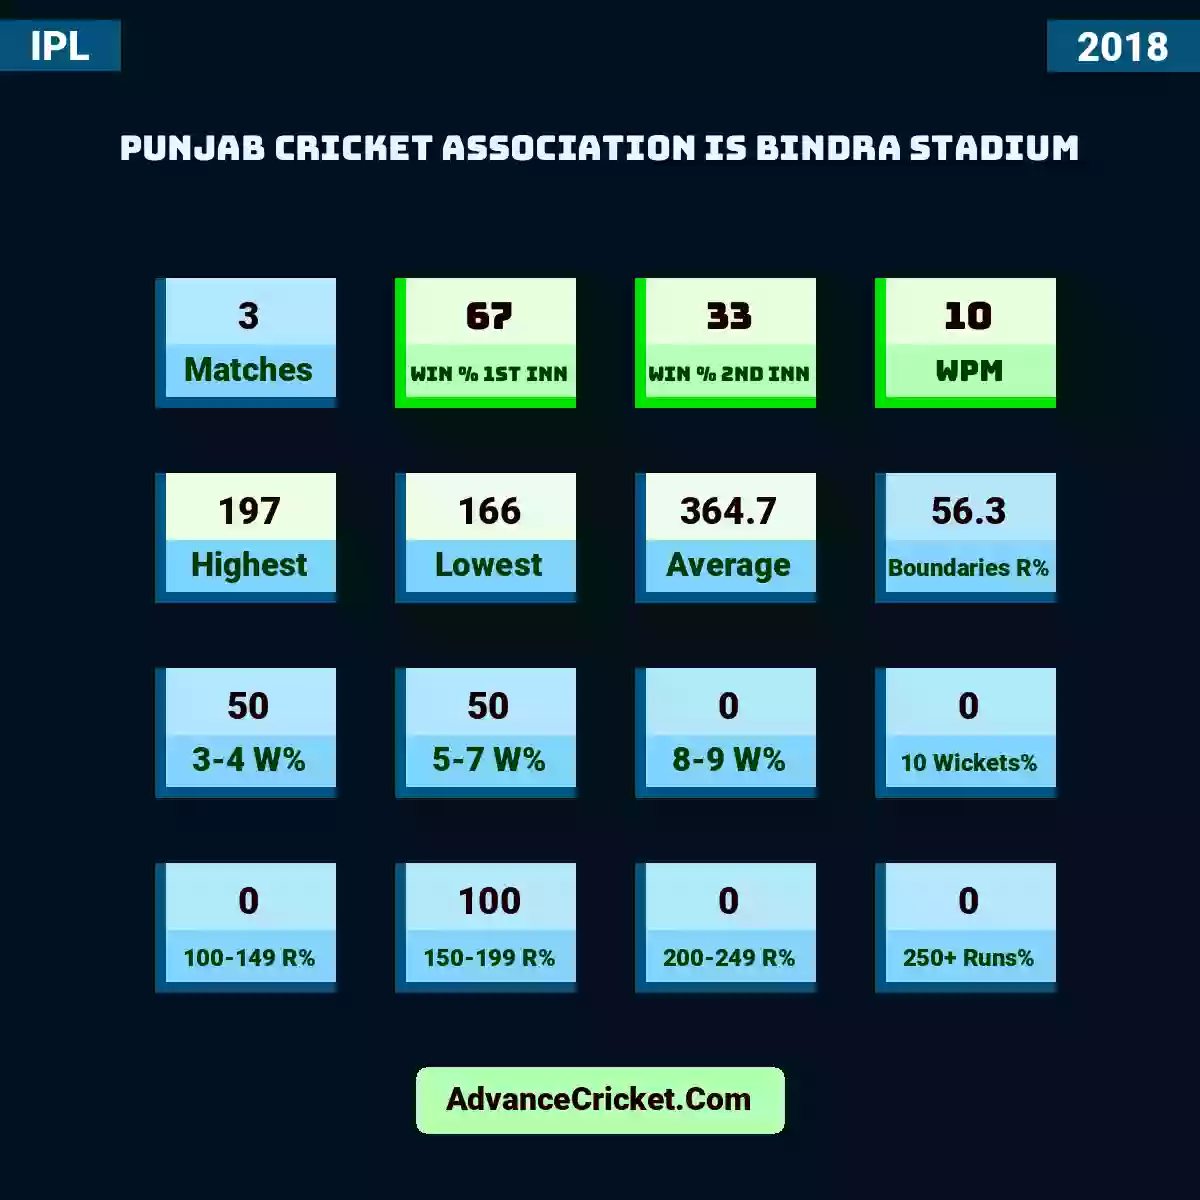 Image showing Punjab Cricket Association IS Bindra Stadium with Matches: 3, Win % 1st Inn: 67, Win % 2nd Inn: 33, WPM: 10, Highest: 197, Lowest: 166, Average: 364.7, Boundaries R%: 56.3, 3-4 W%: 50, 5-7 W%: 50, 8-9 W%: 0, 10 Wickets%: 0, 100-149 R%: 0, 150-199 R%: 100, 200-249 R%: 0, 250+ Runs%: 0.